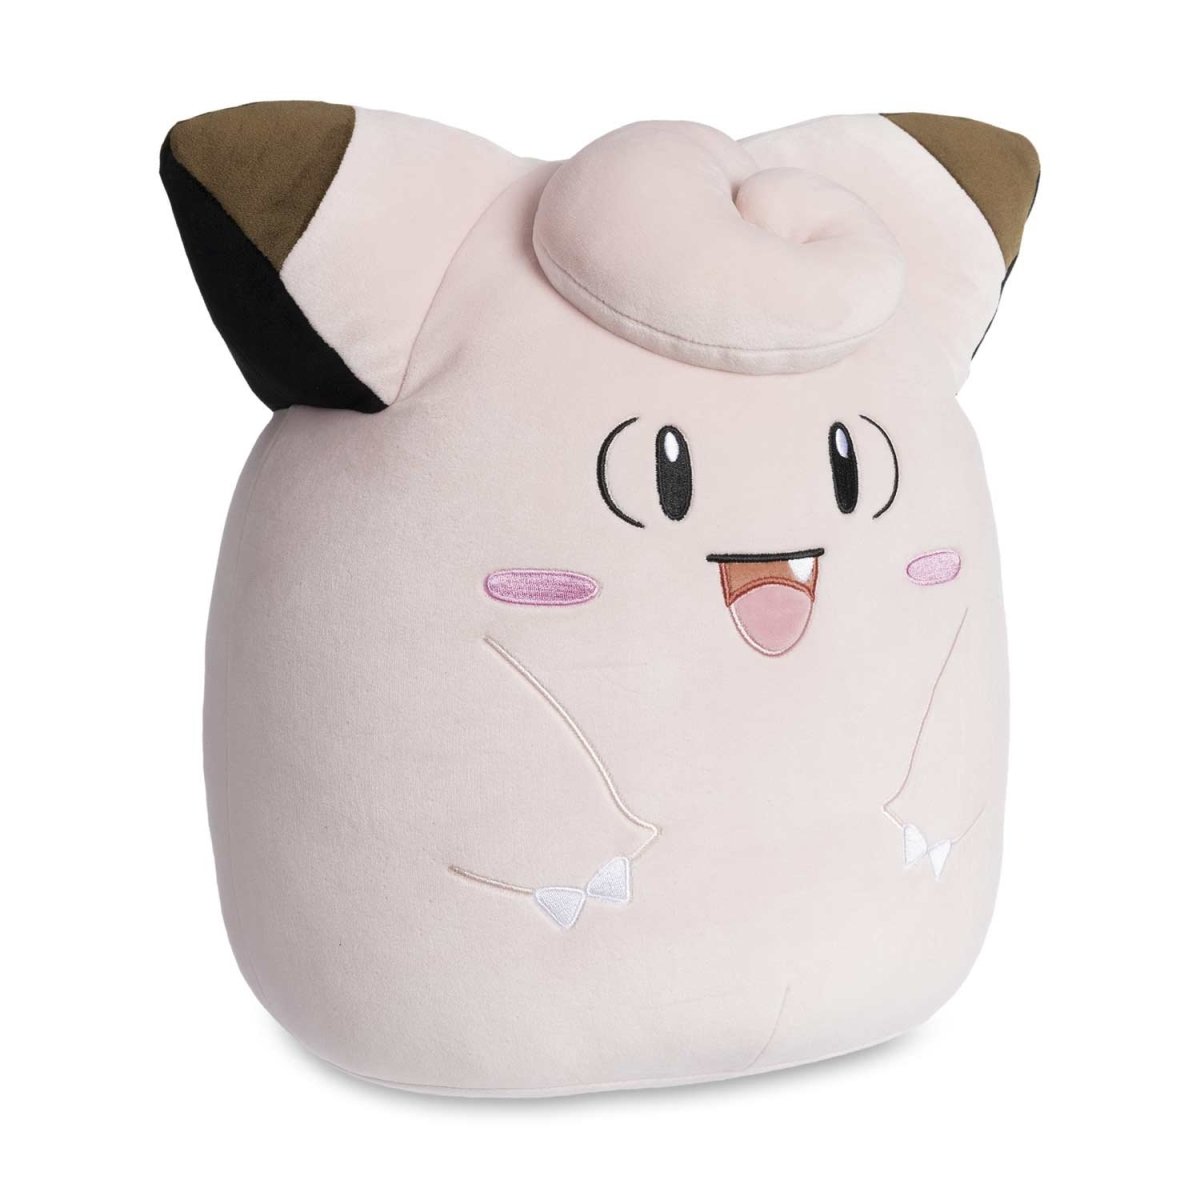 Pokémon Squishmallows Are Coming To The Pokémon Center Very Soon